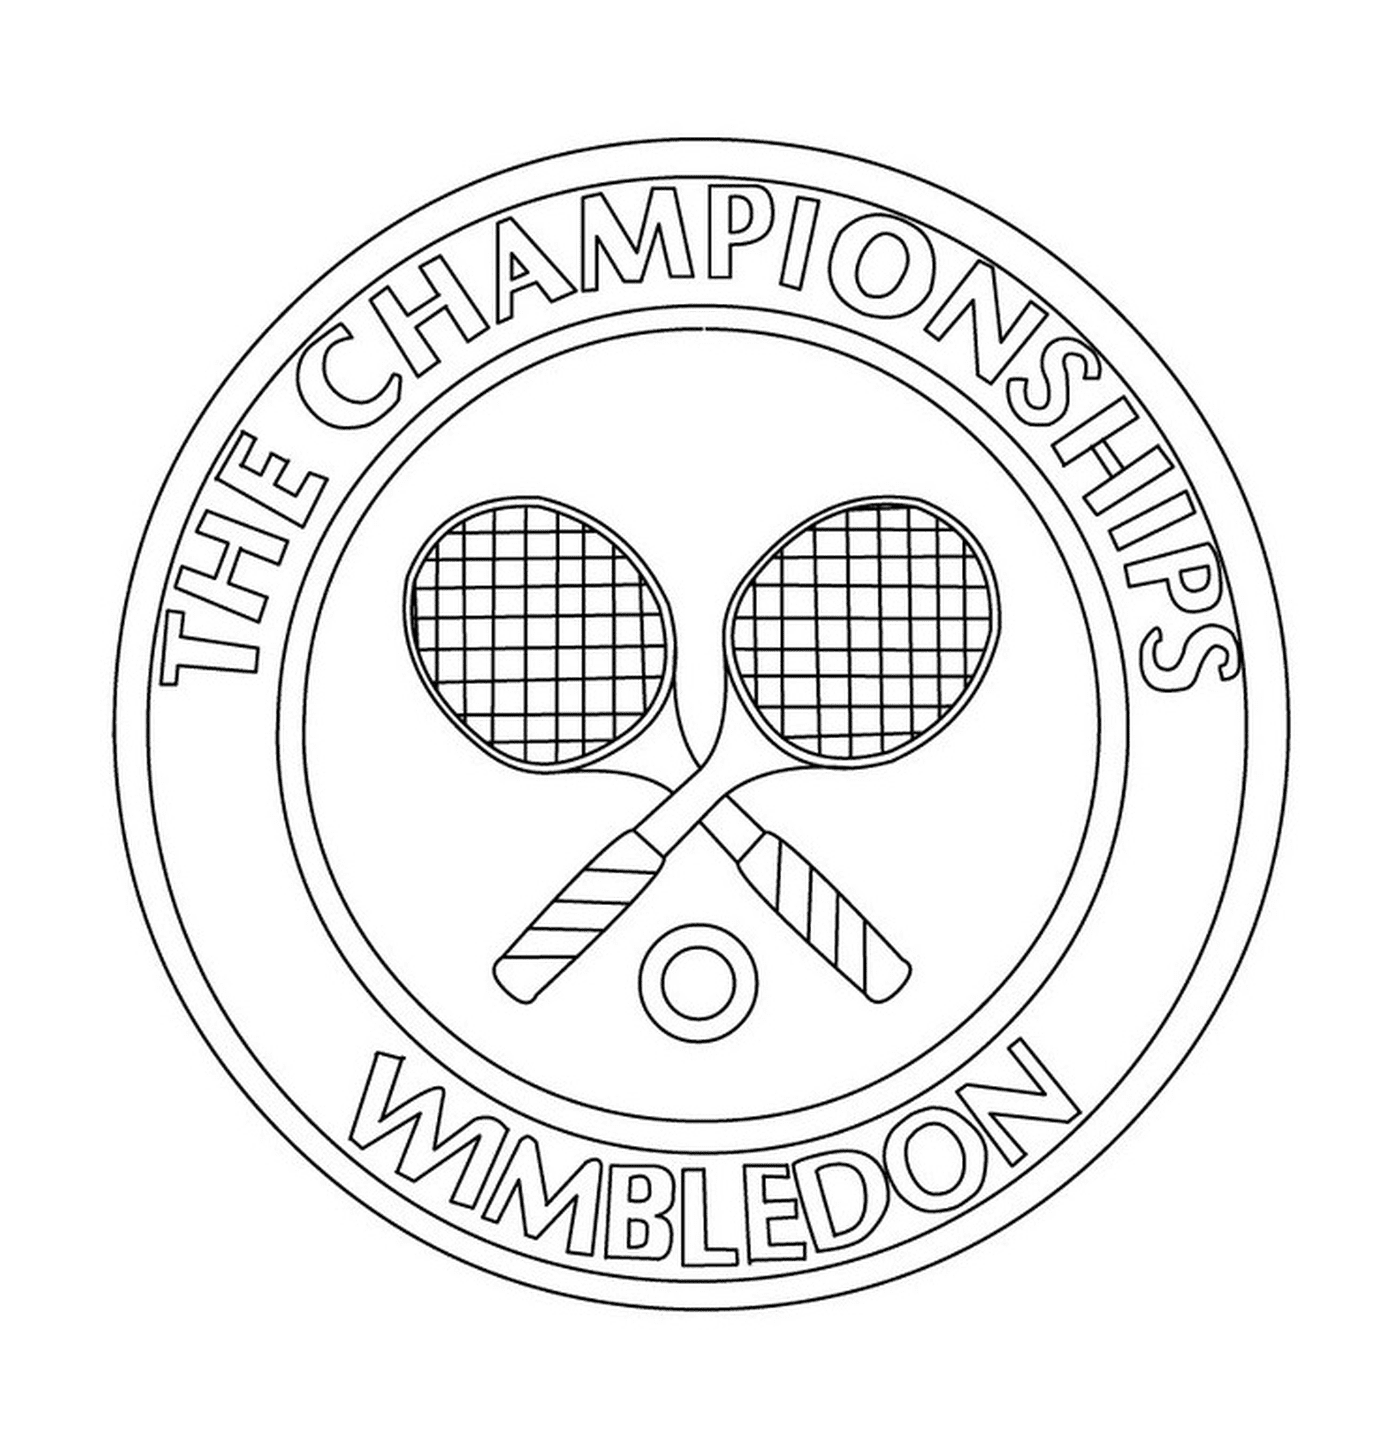  logo tenis The Championships Wimbledon 